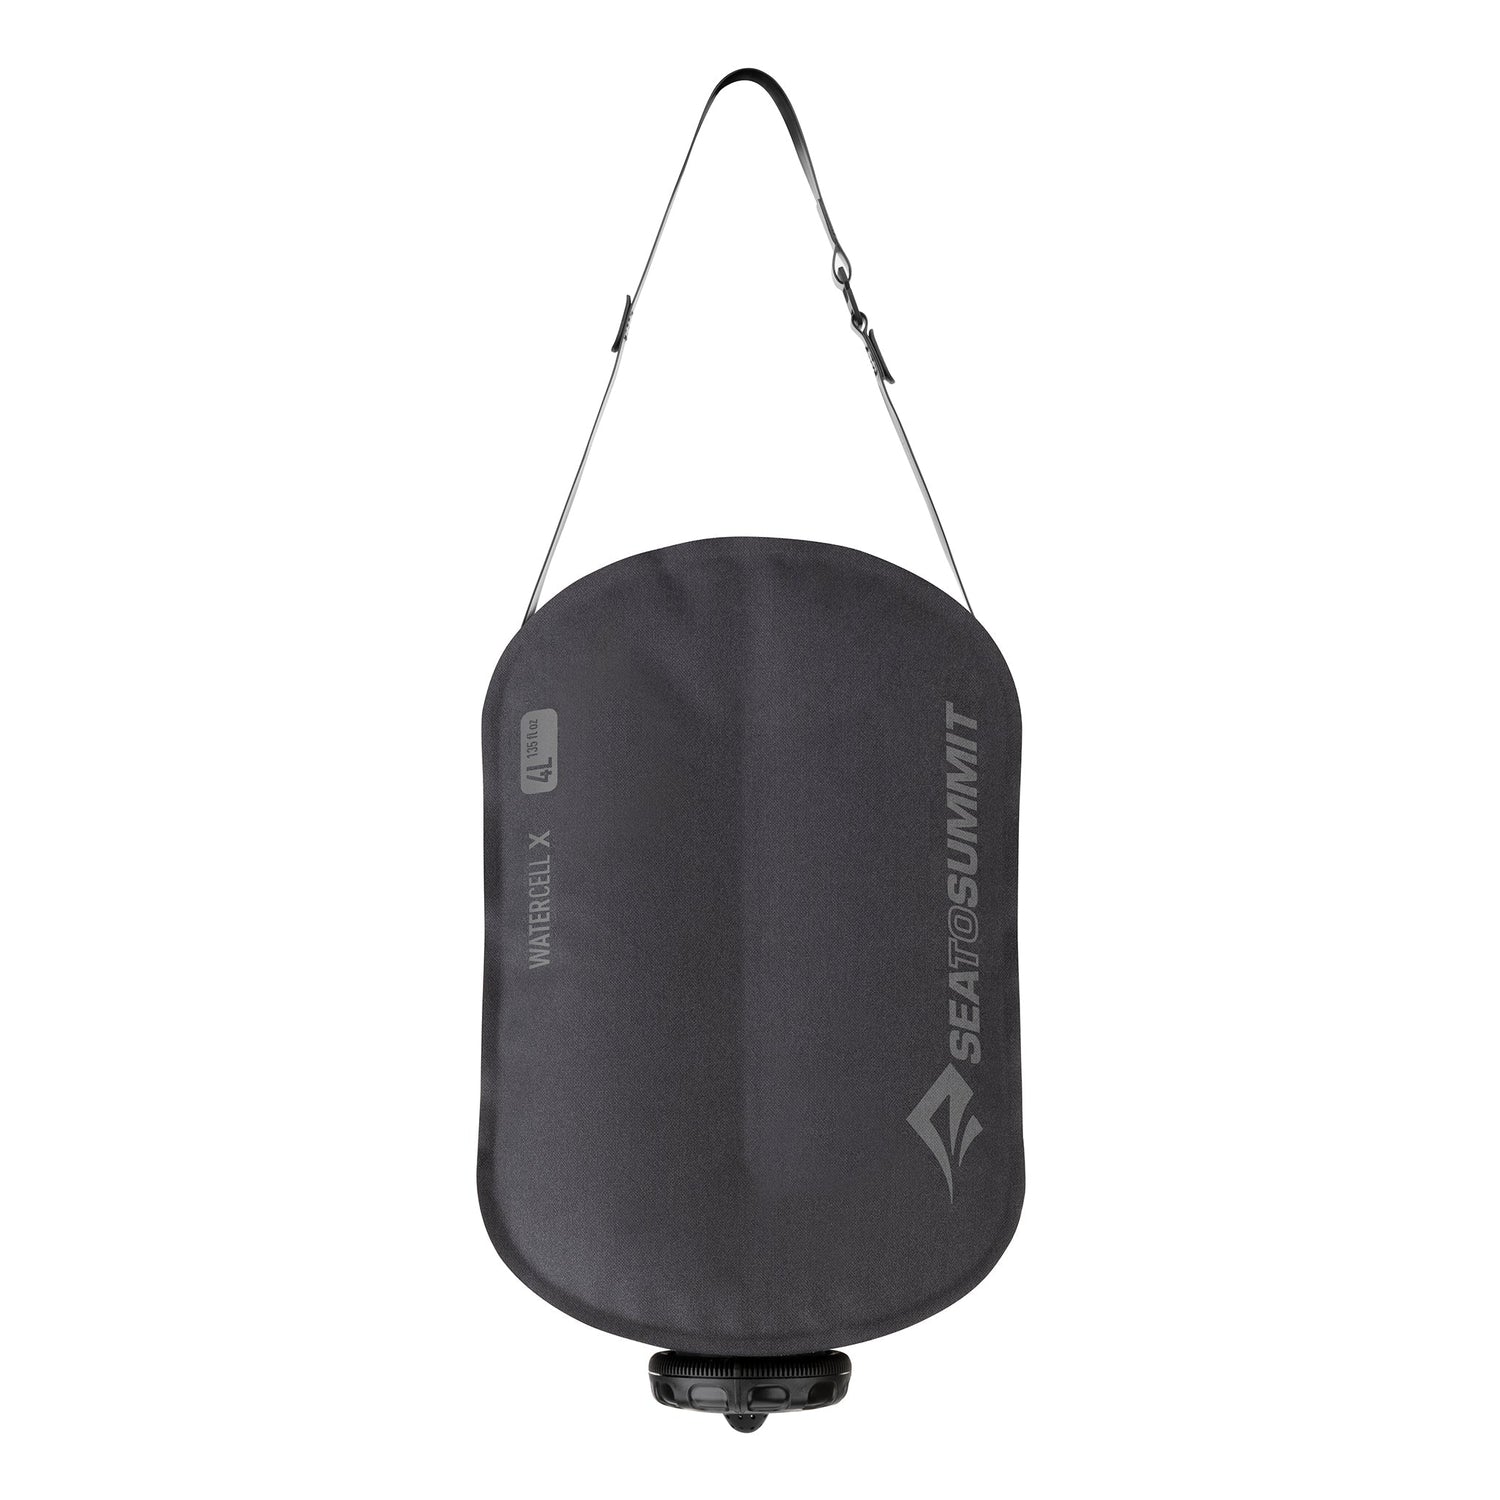 Warter cell X _ durable reservoir water bag _ hanging strap